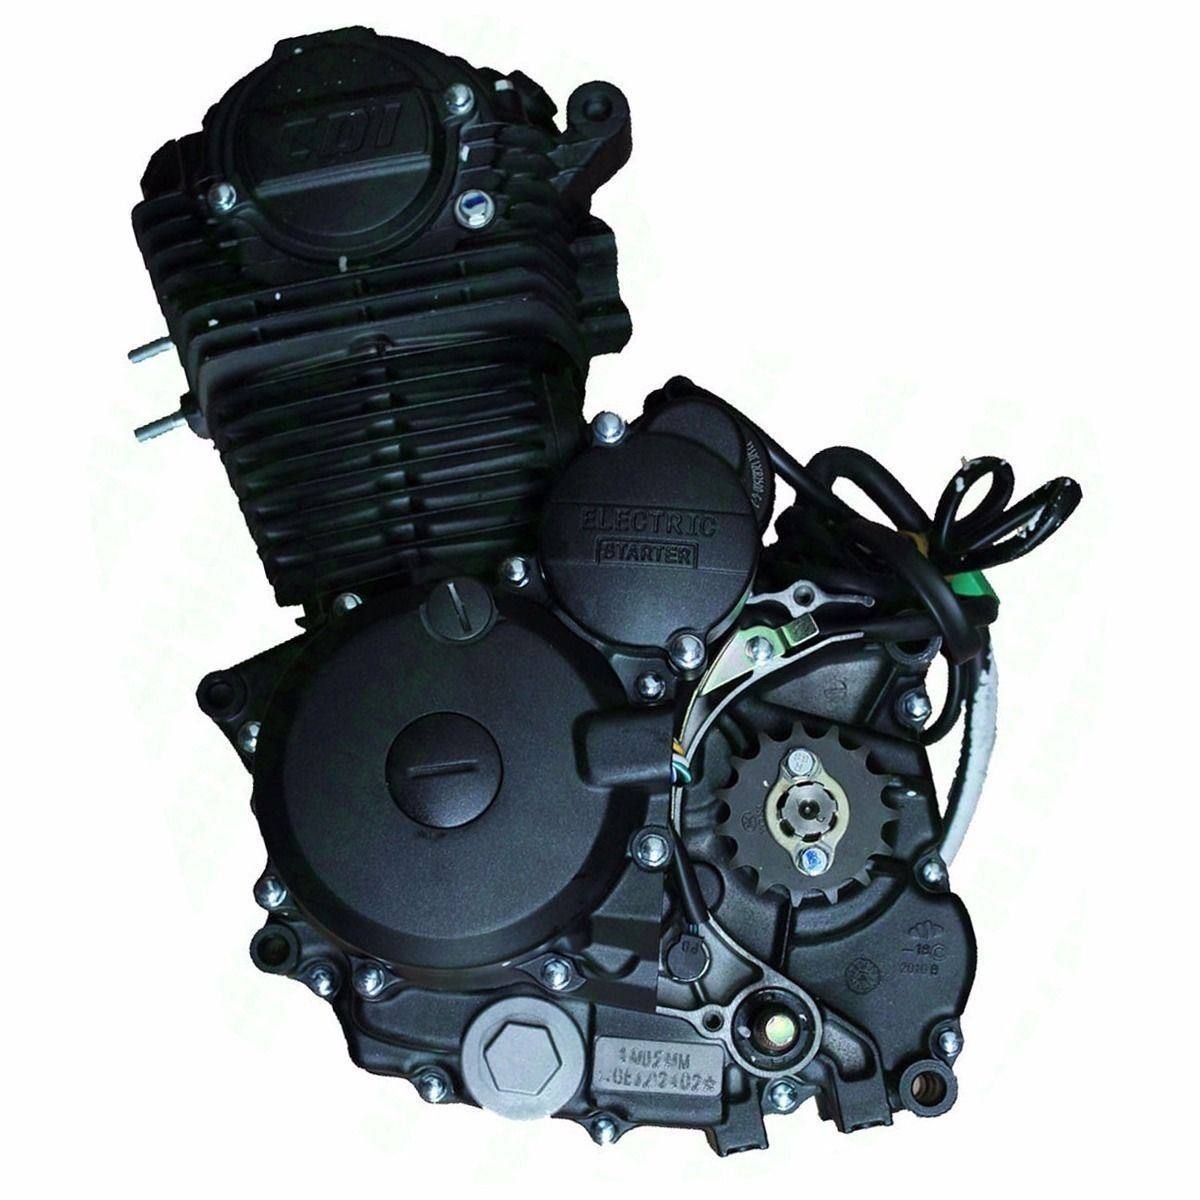 Zongshen 250cc OHC Air Cooled Engine For Atomik Thumpstar Dirt Bike Motorbike - TDRMOTO